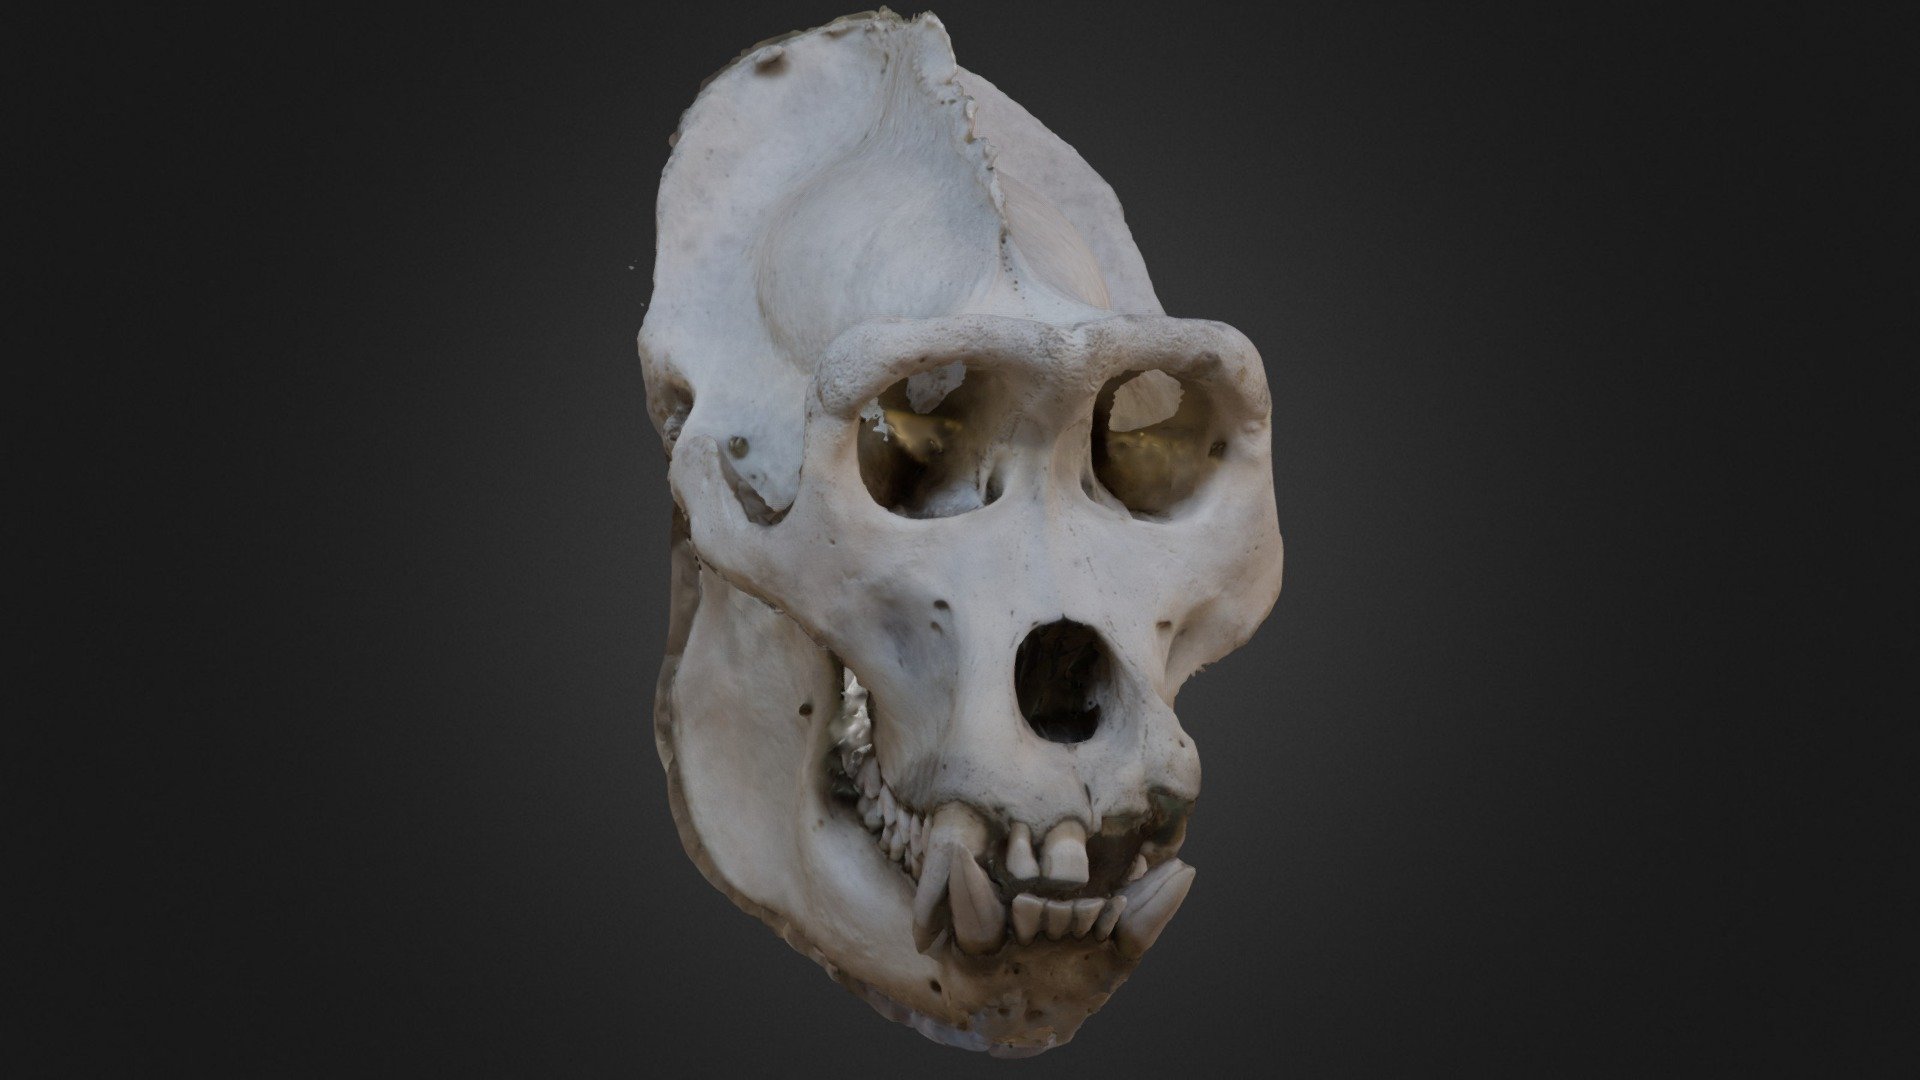 Skull of a male gorilla.
Museum National d'Histoire Naturelle, Paris, France.

3D scanned using Agisoft Photoscan 3d model